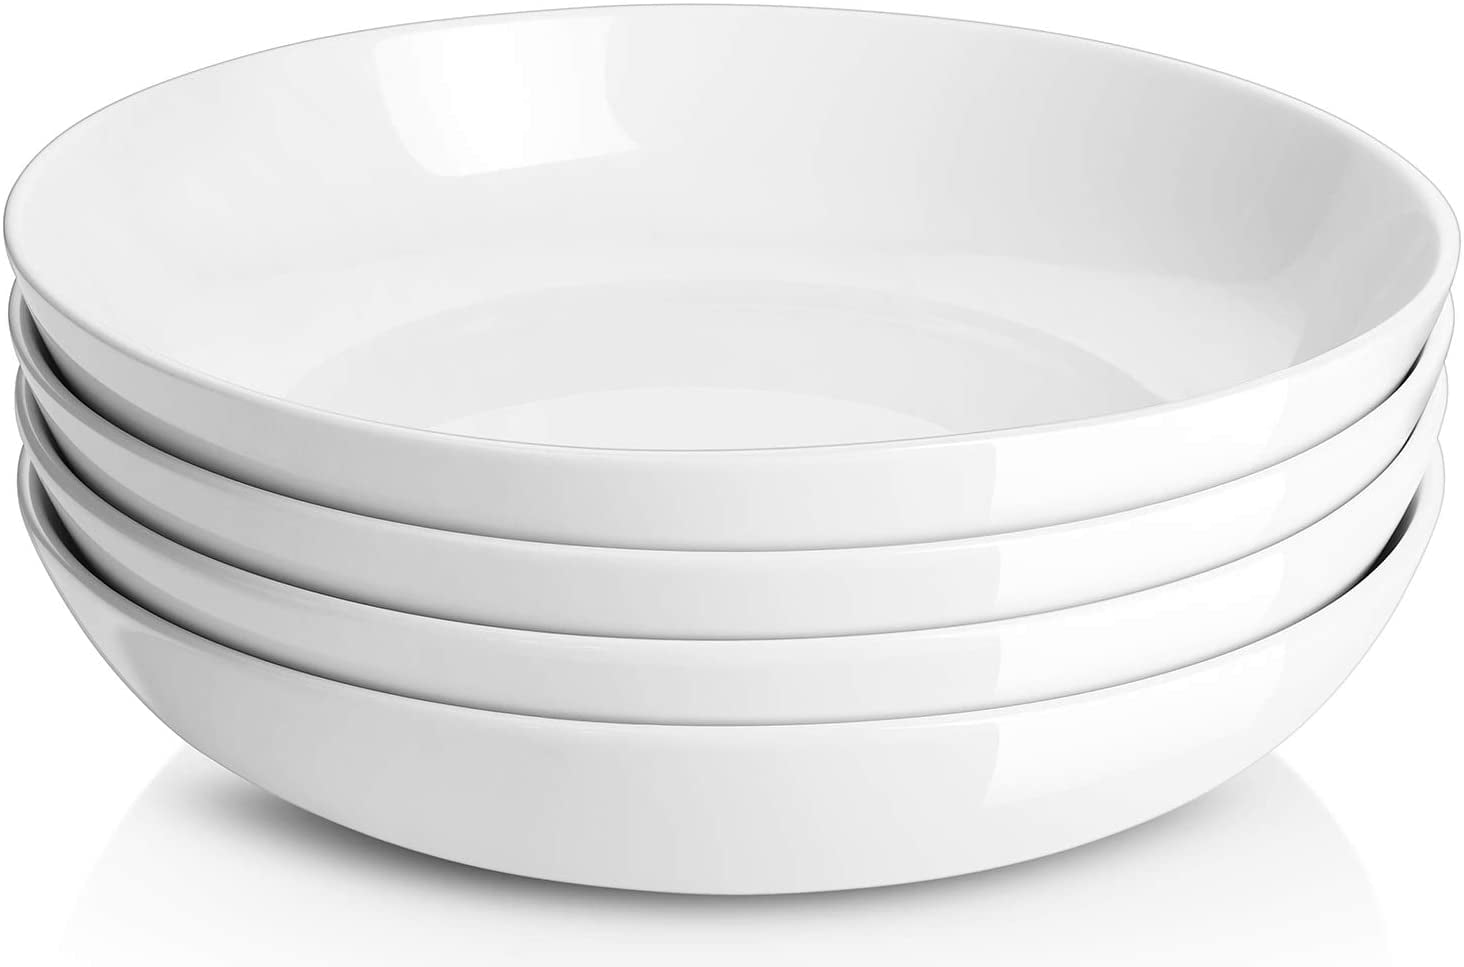 DOWAN 8 Large Serving Bowls - 2 Quart Big Salad Bowl, Porcelain White Bowl  for Kitchen, Soup, Salad, Pho, Pasta, Ramen, Popcorn, Ceramic Mixing Bowl,  Microwave & Dishwasher Safe, Set of 2